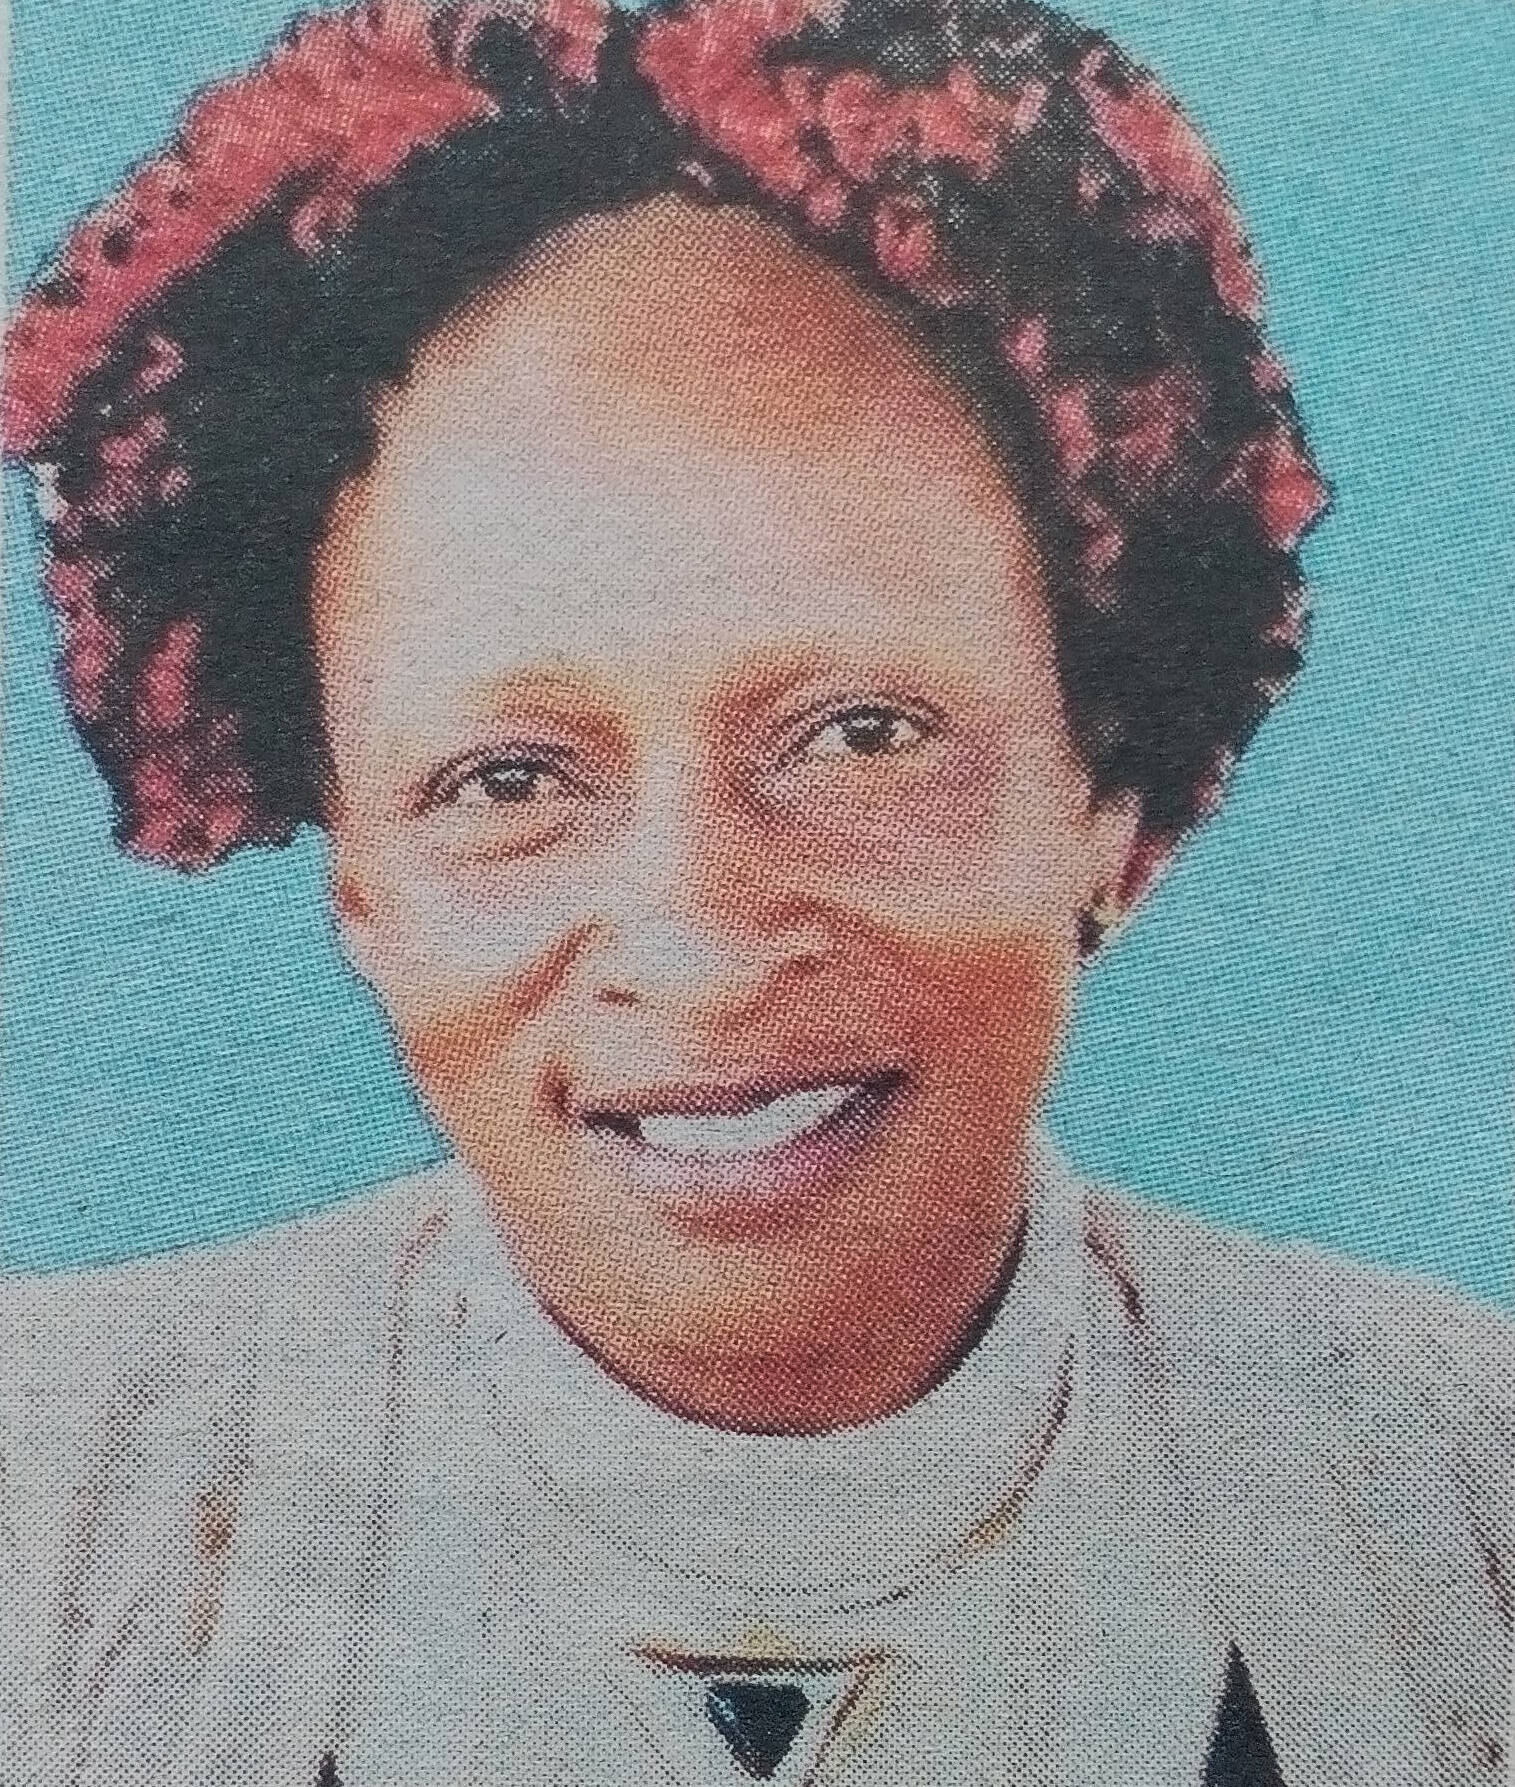 Obituary Image of Madam Sheila Nafula Wasige 3/11/1960 - 17/3/2017